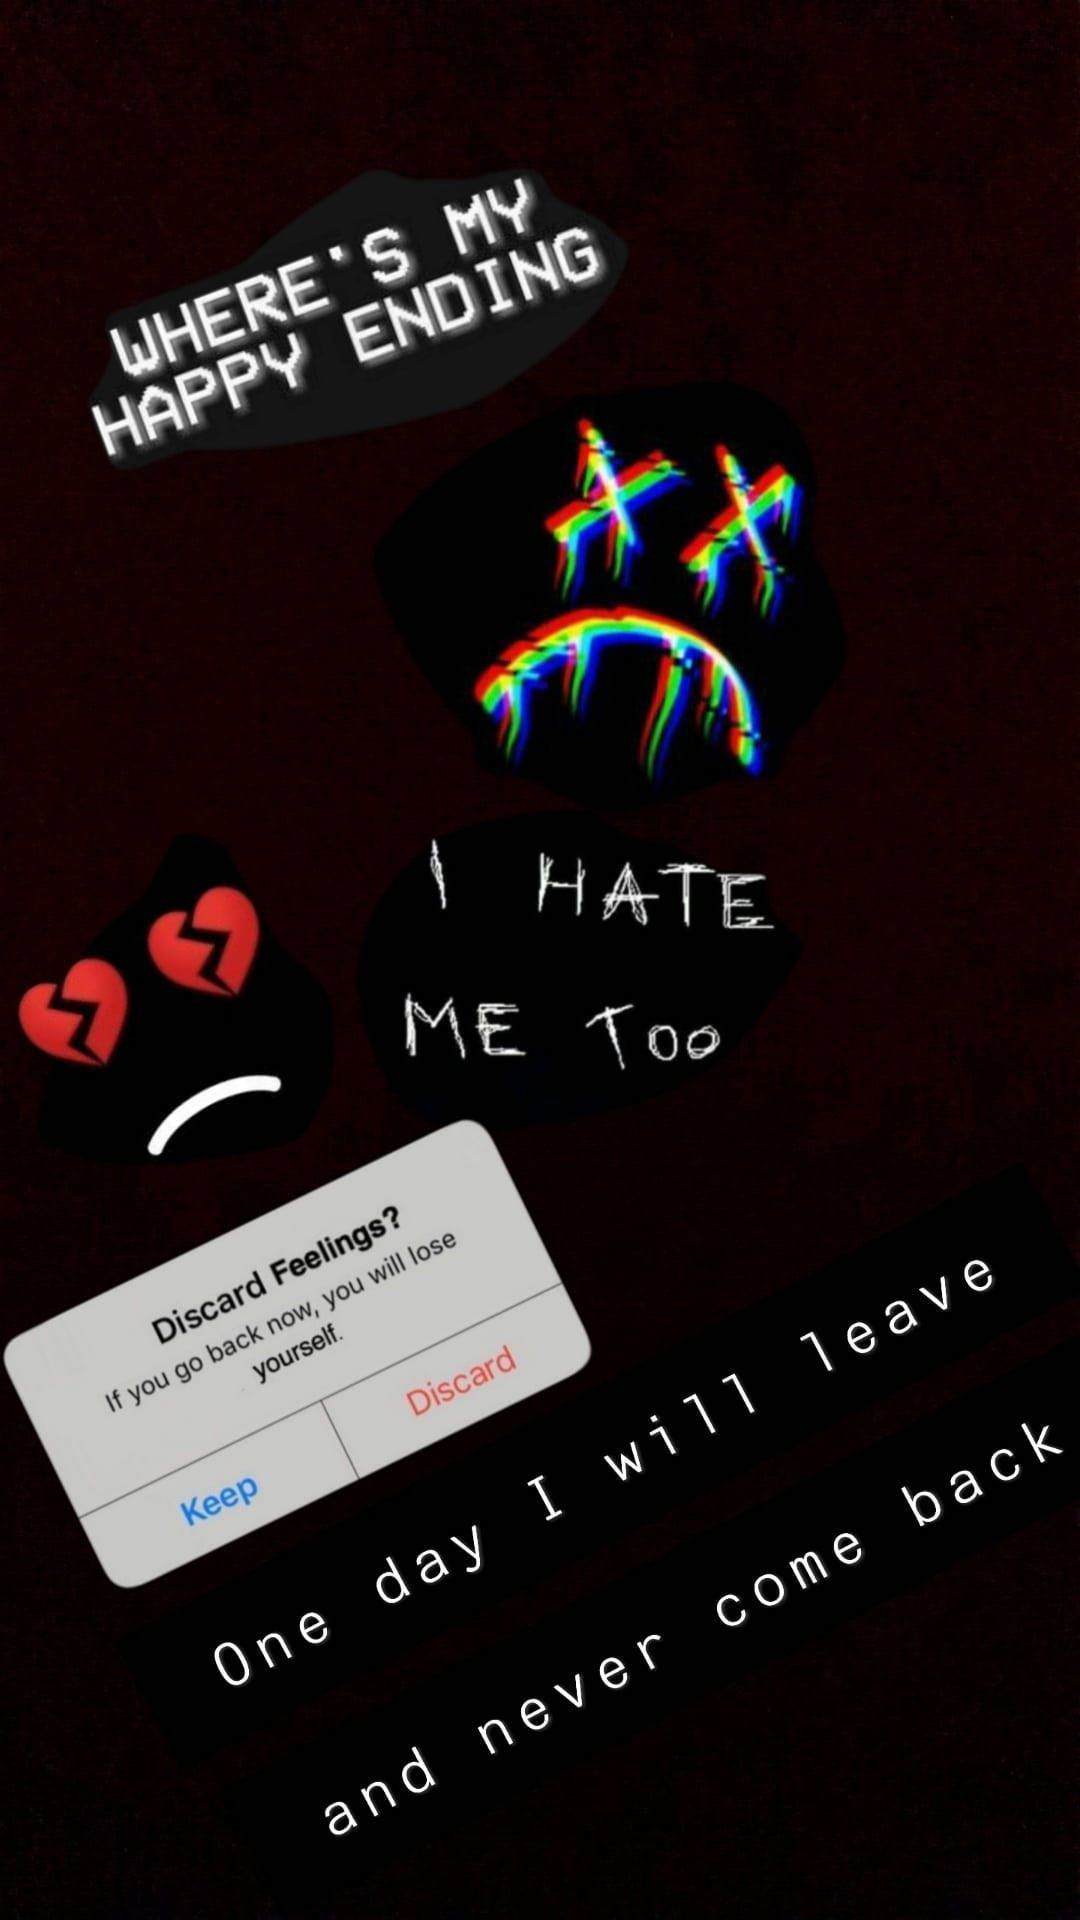 I hate me too - Depression